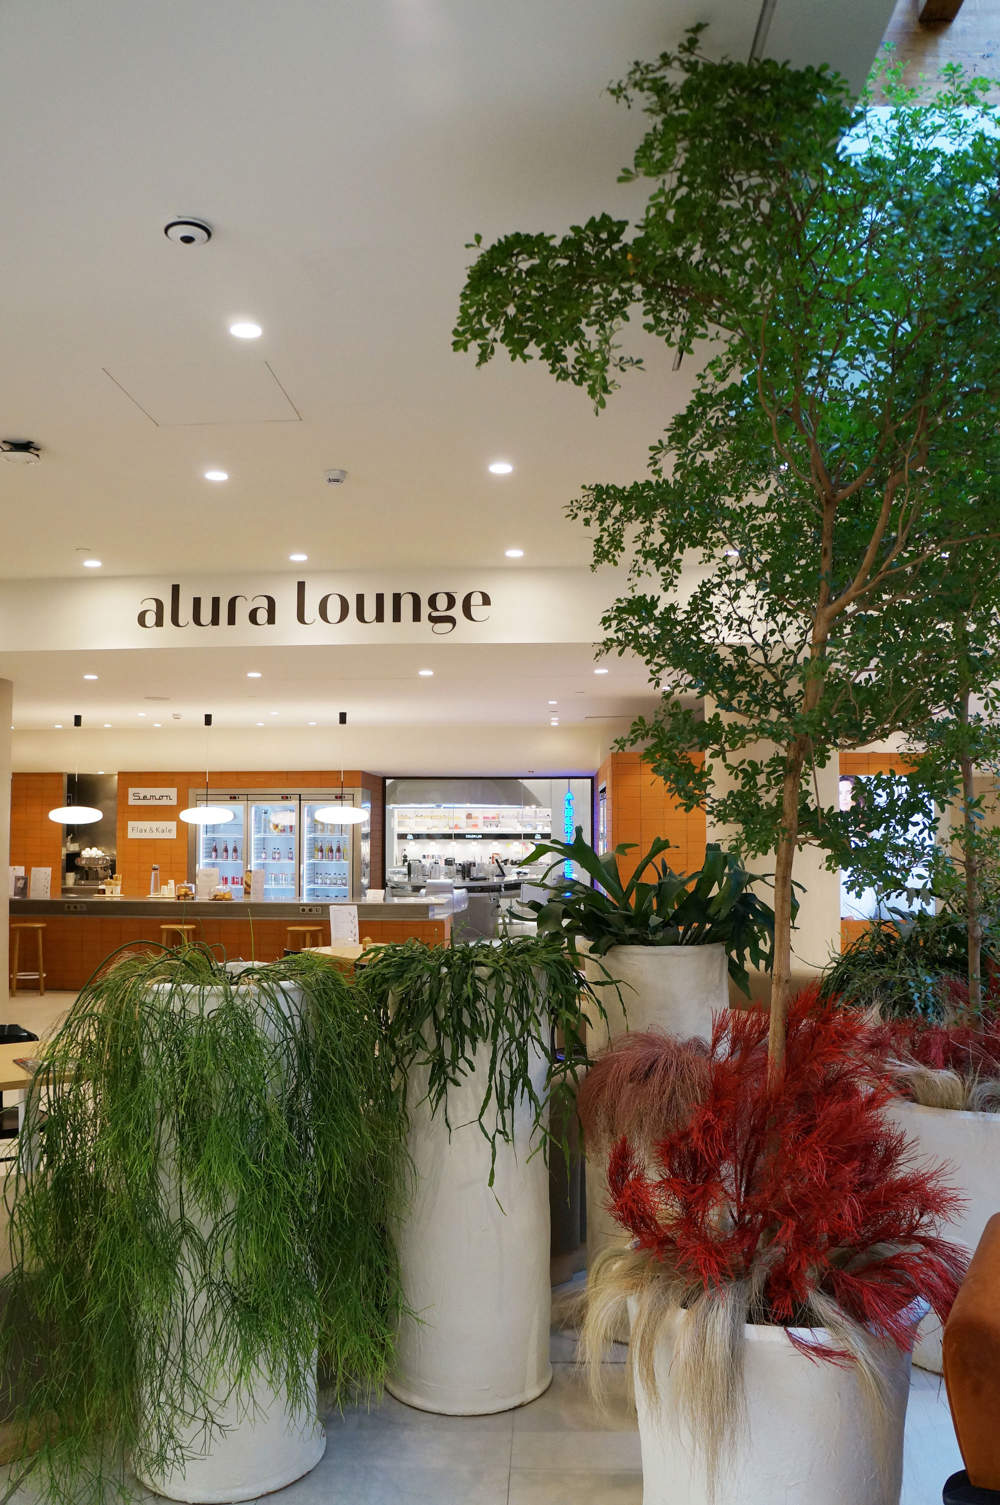 El confortable lounge del centro Alura